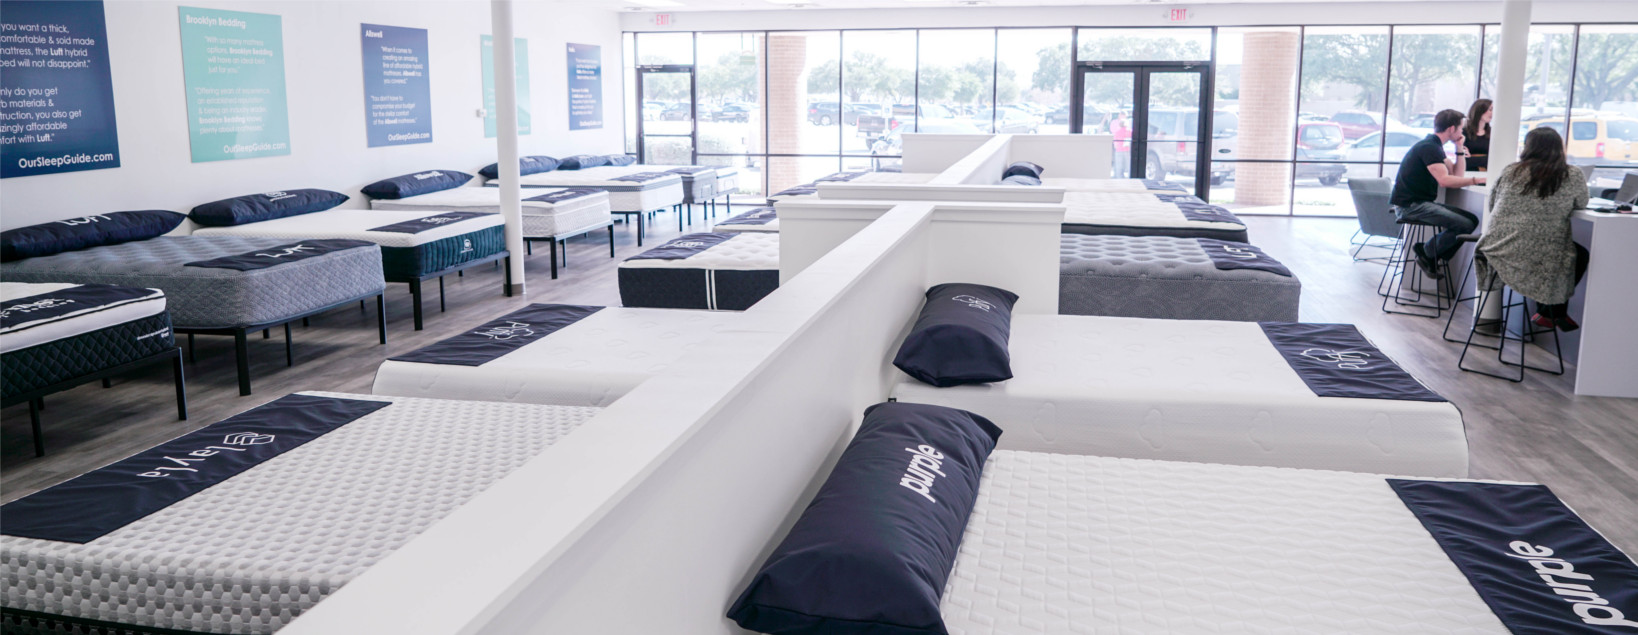 our sleep guide online mattress showroom austin